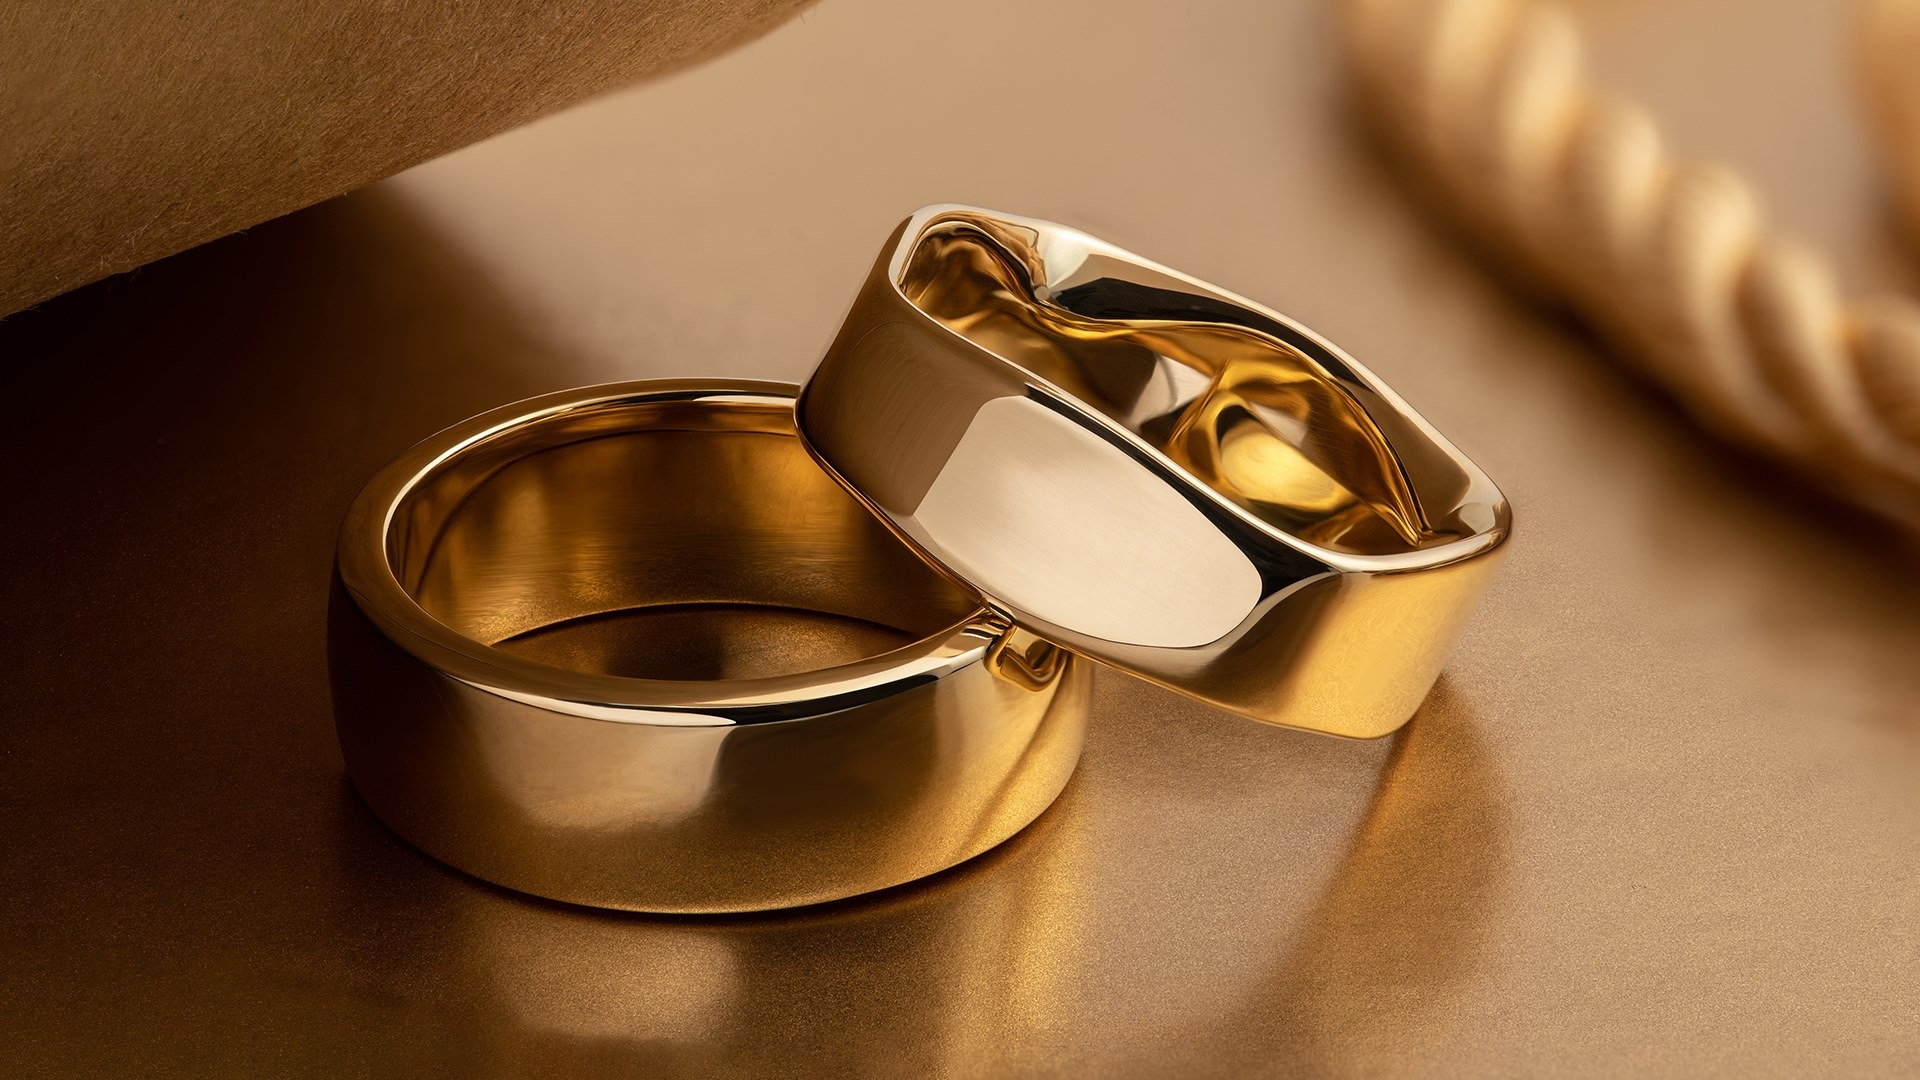 Latest Diamond Rings Design in Gold and Diamond 2021 | Engagement Diamond  Ring Designs for Men Women - YouTube